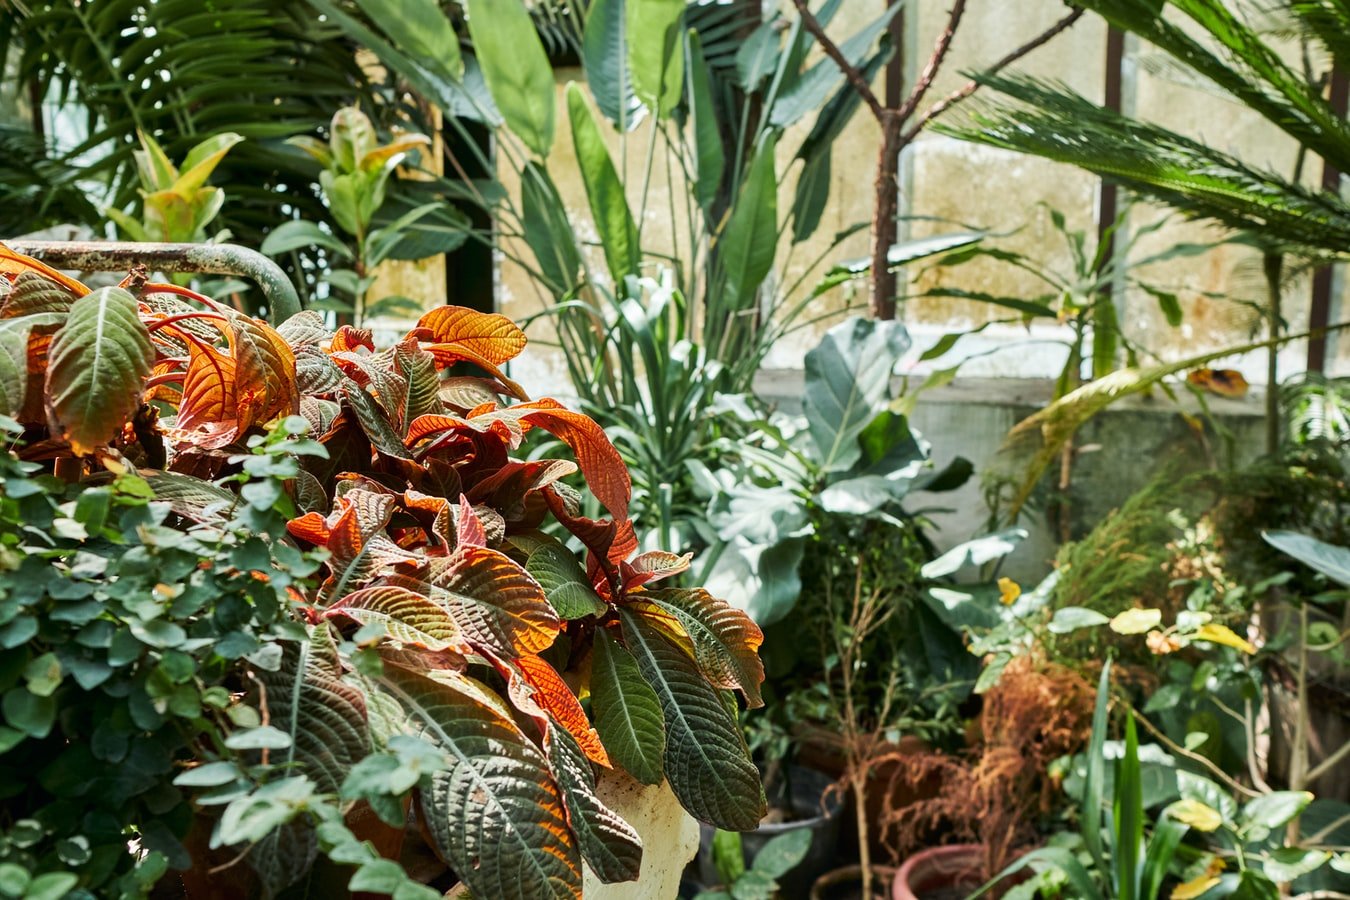 Inside the greenhouse | Source: Unsplash